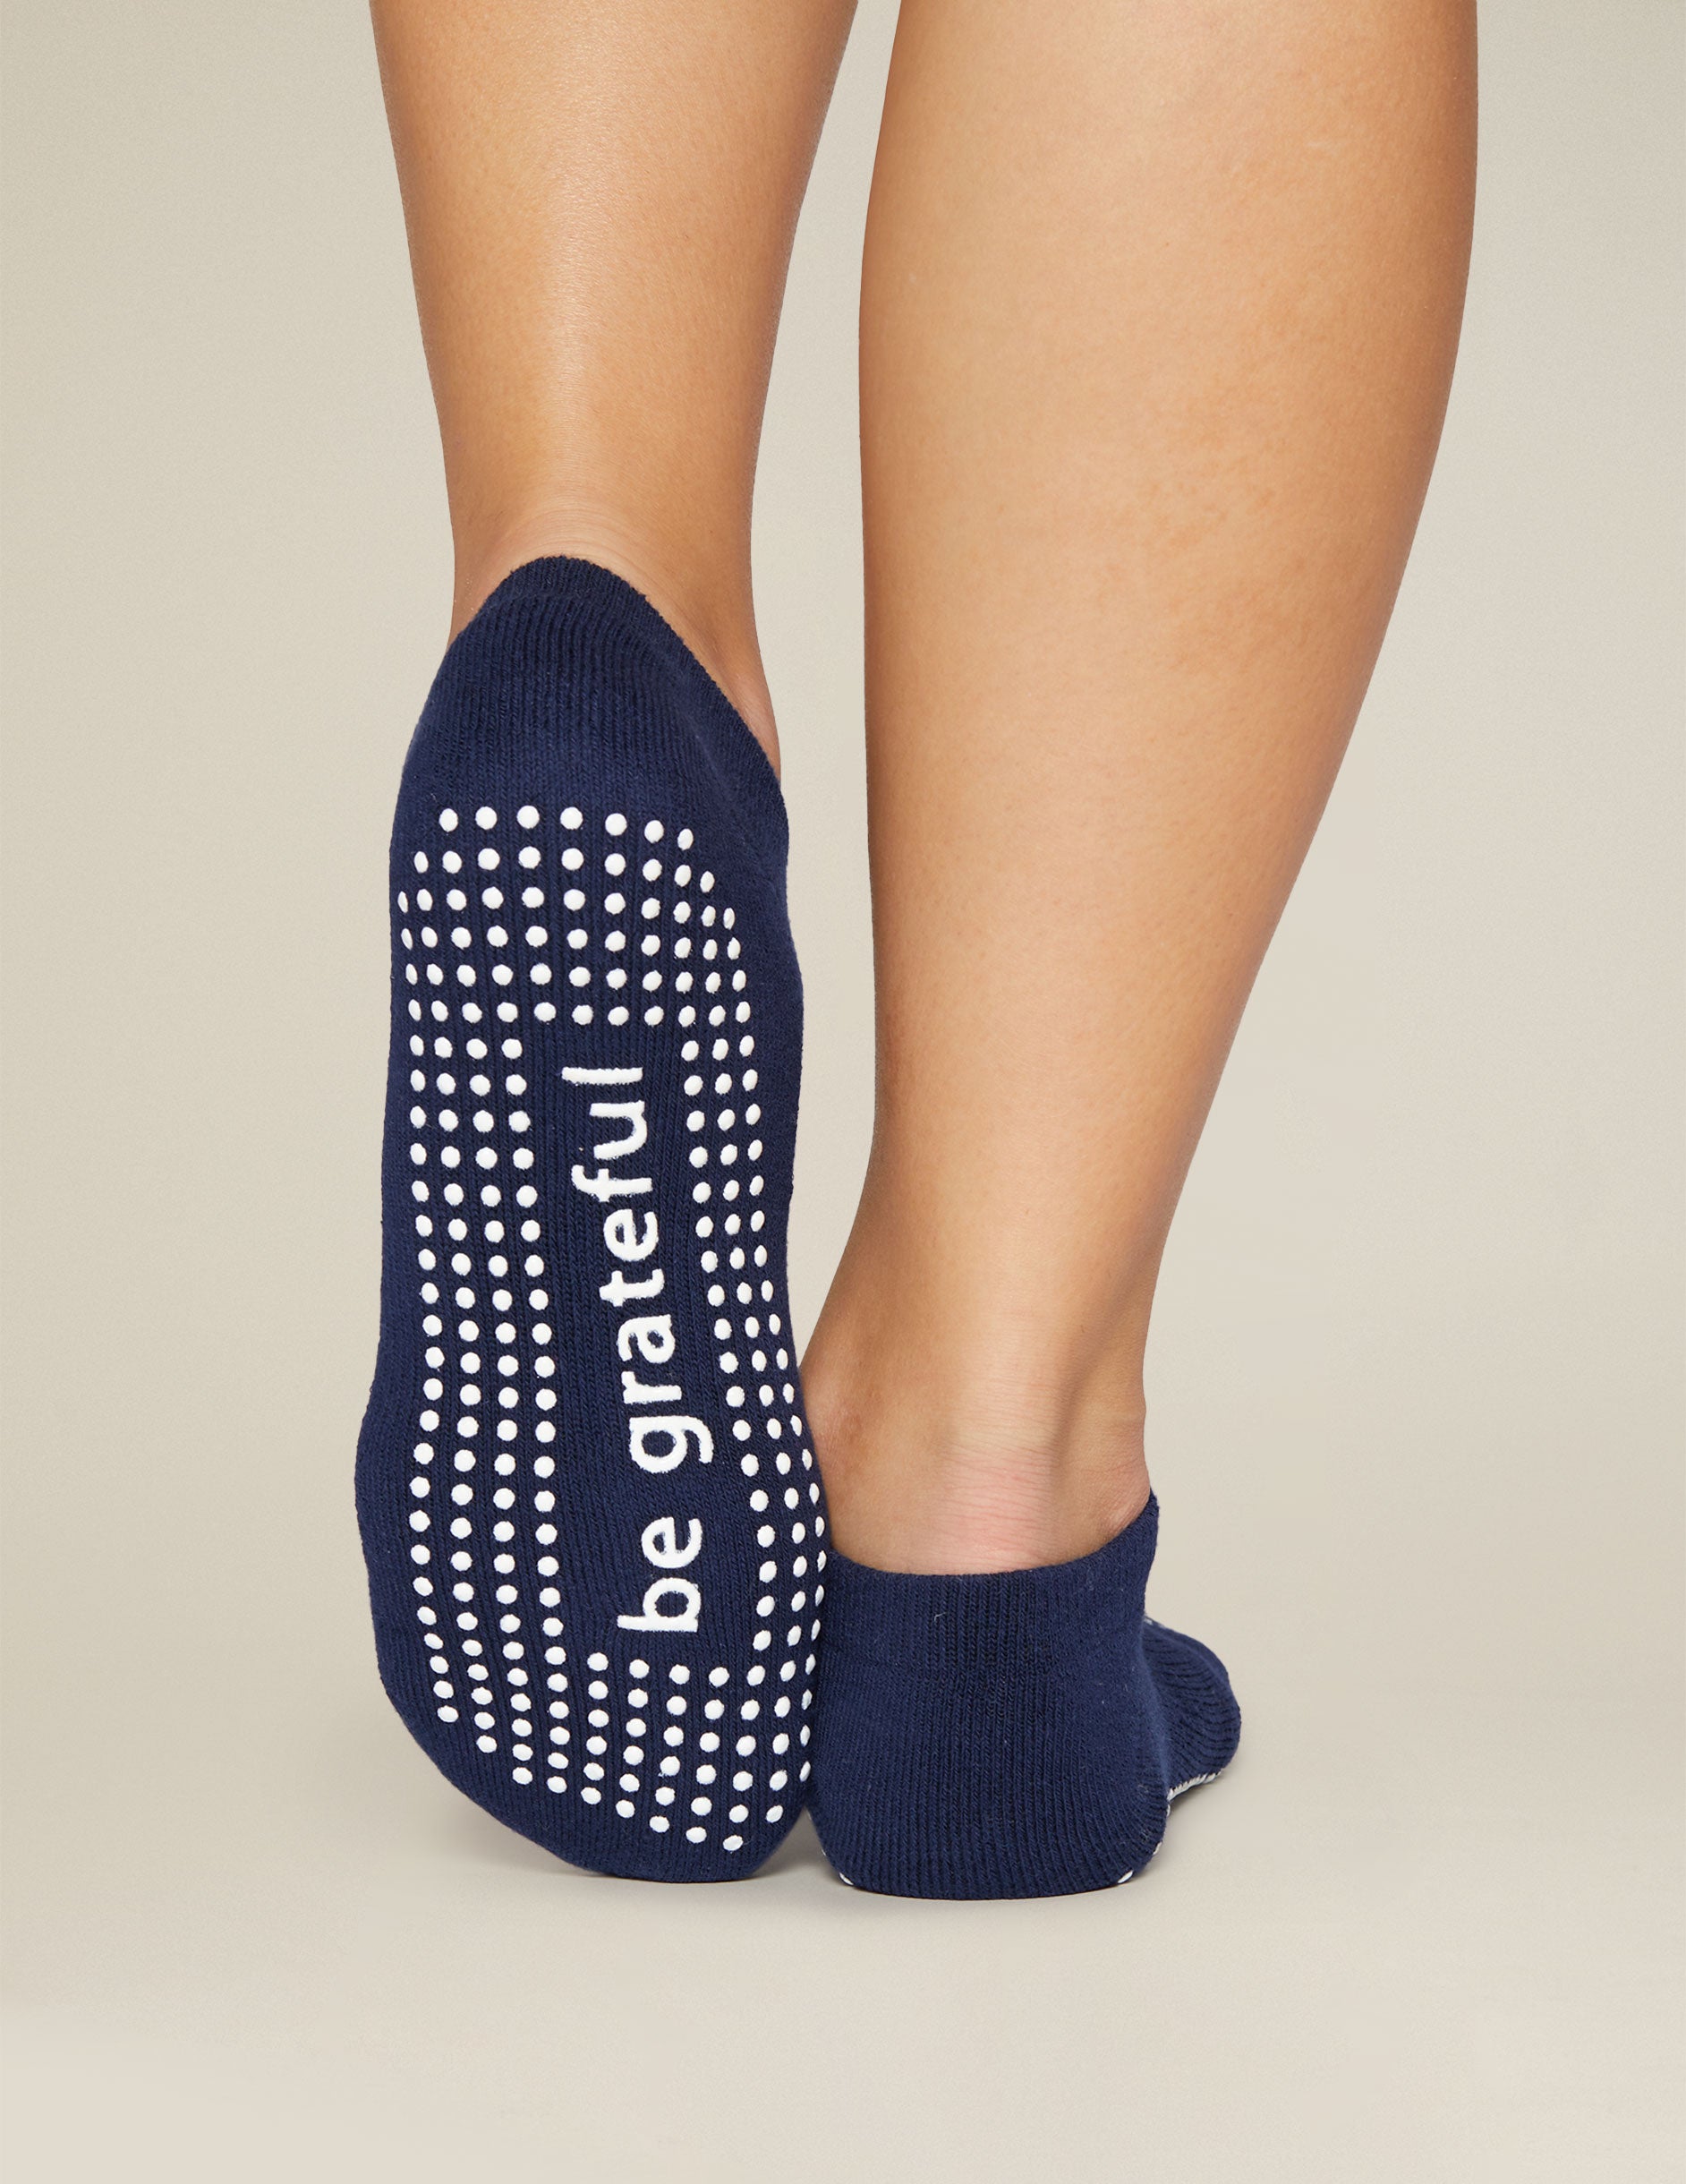 Toeless Yoga Socks Grey with Blue Grip Dots Medium - Yoga